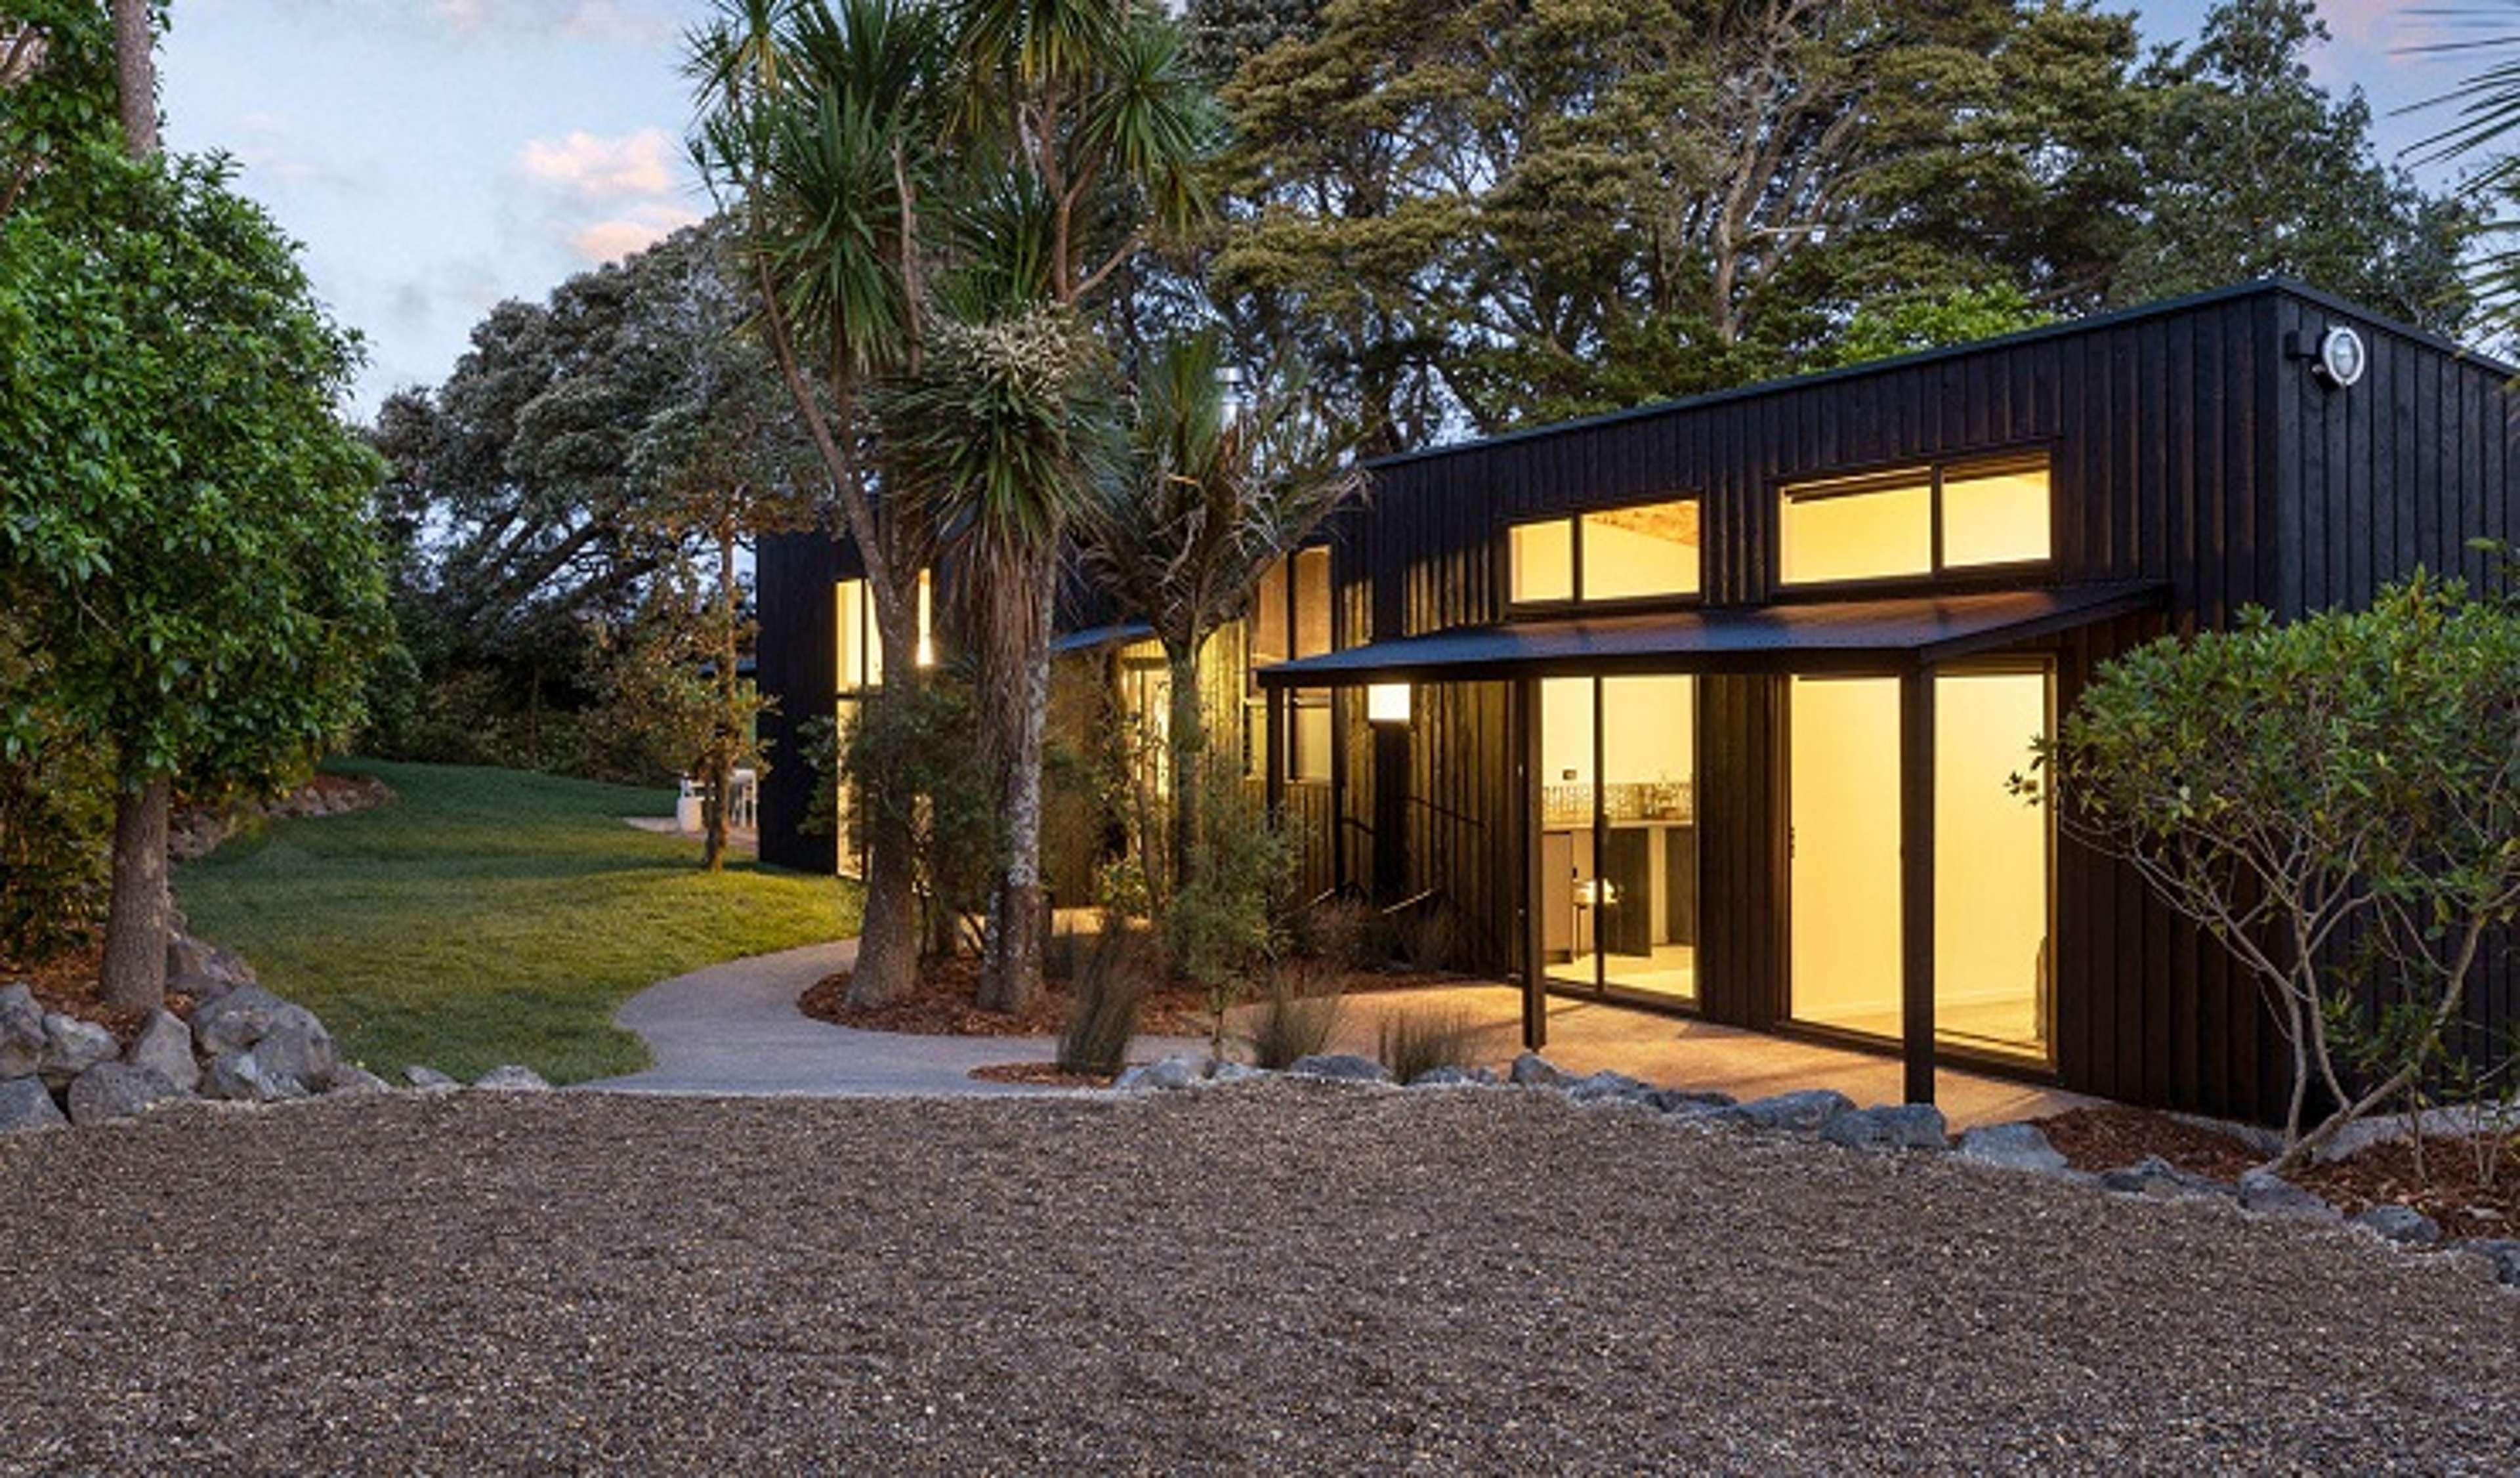 Kiwi Design House – Welcome to Kiwi Design House, where creativity